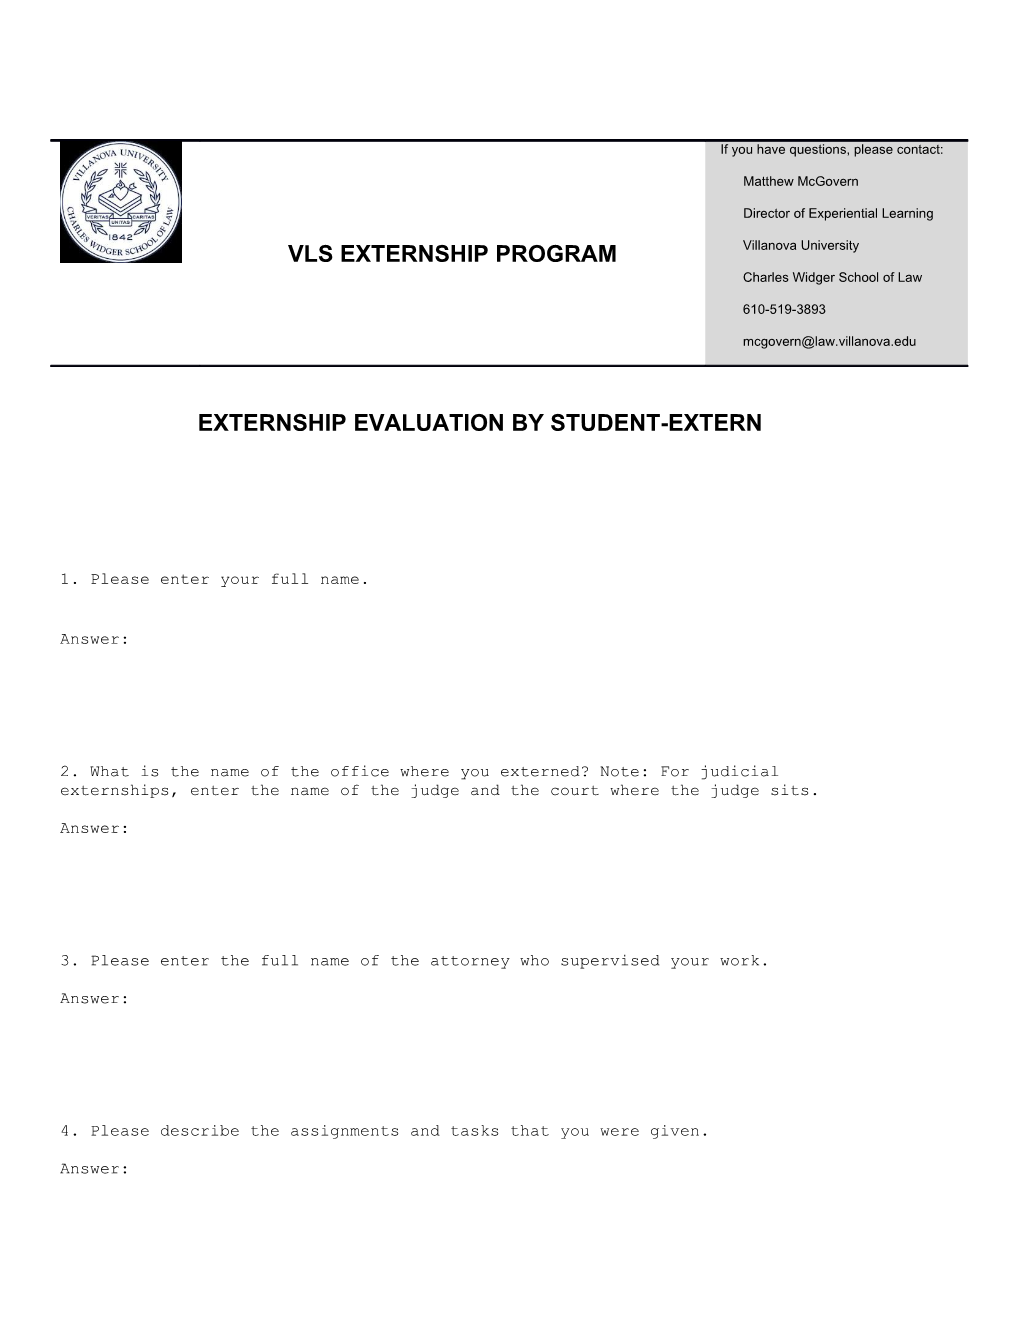 Externship Evaluation by Student-Extern